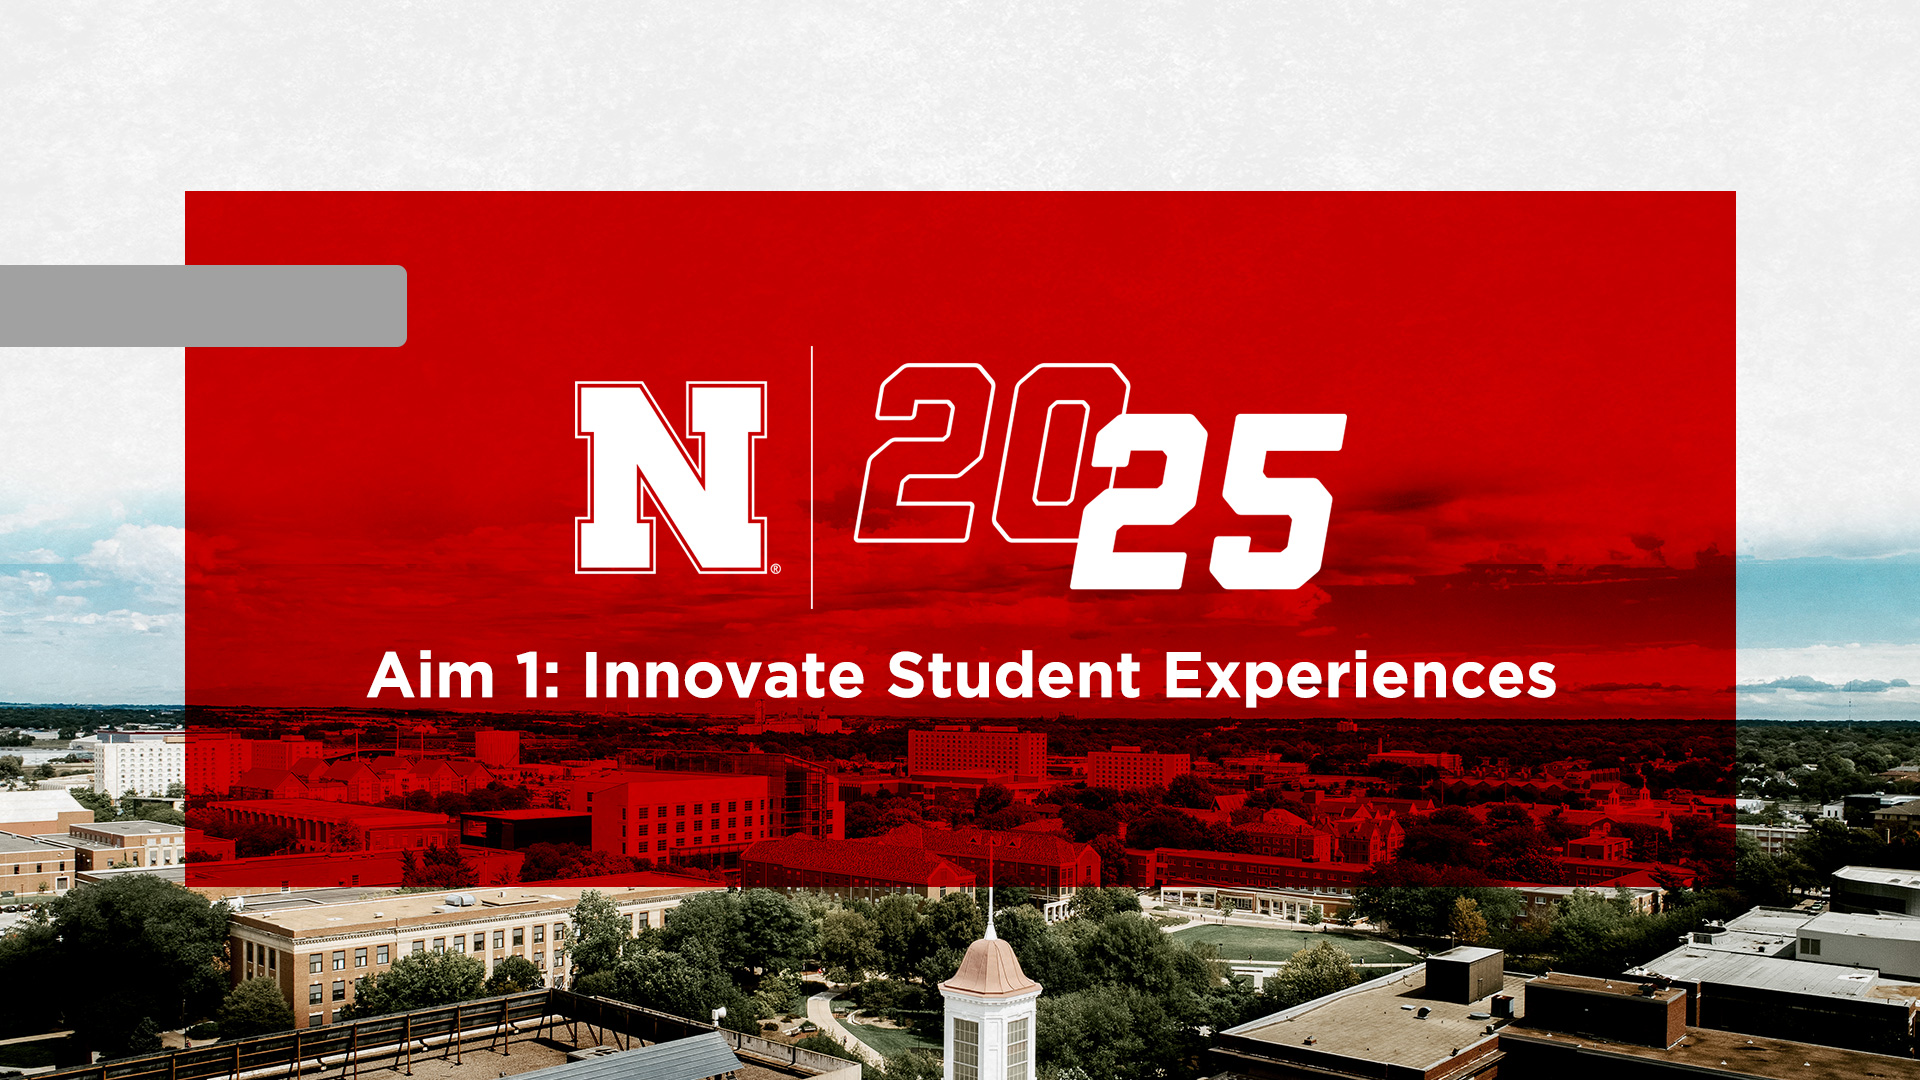 N2025 Conversations | Aim 1: Innovative Student Experiences